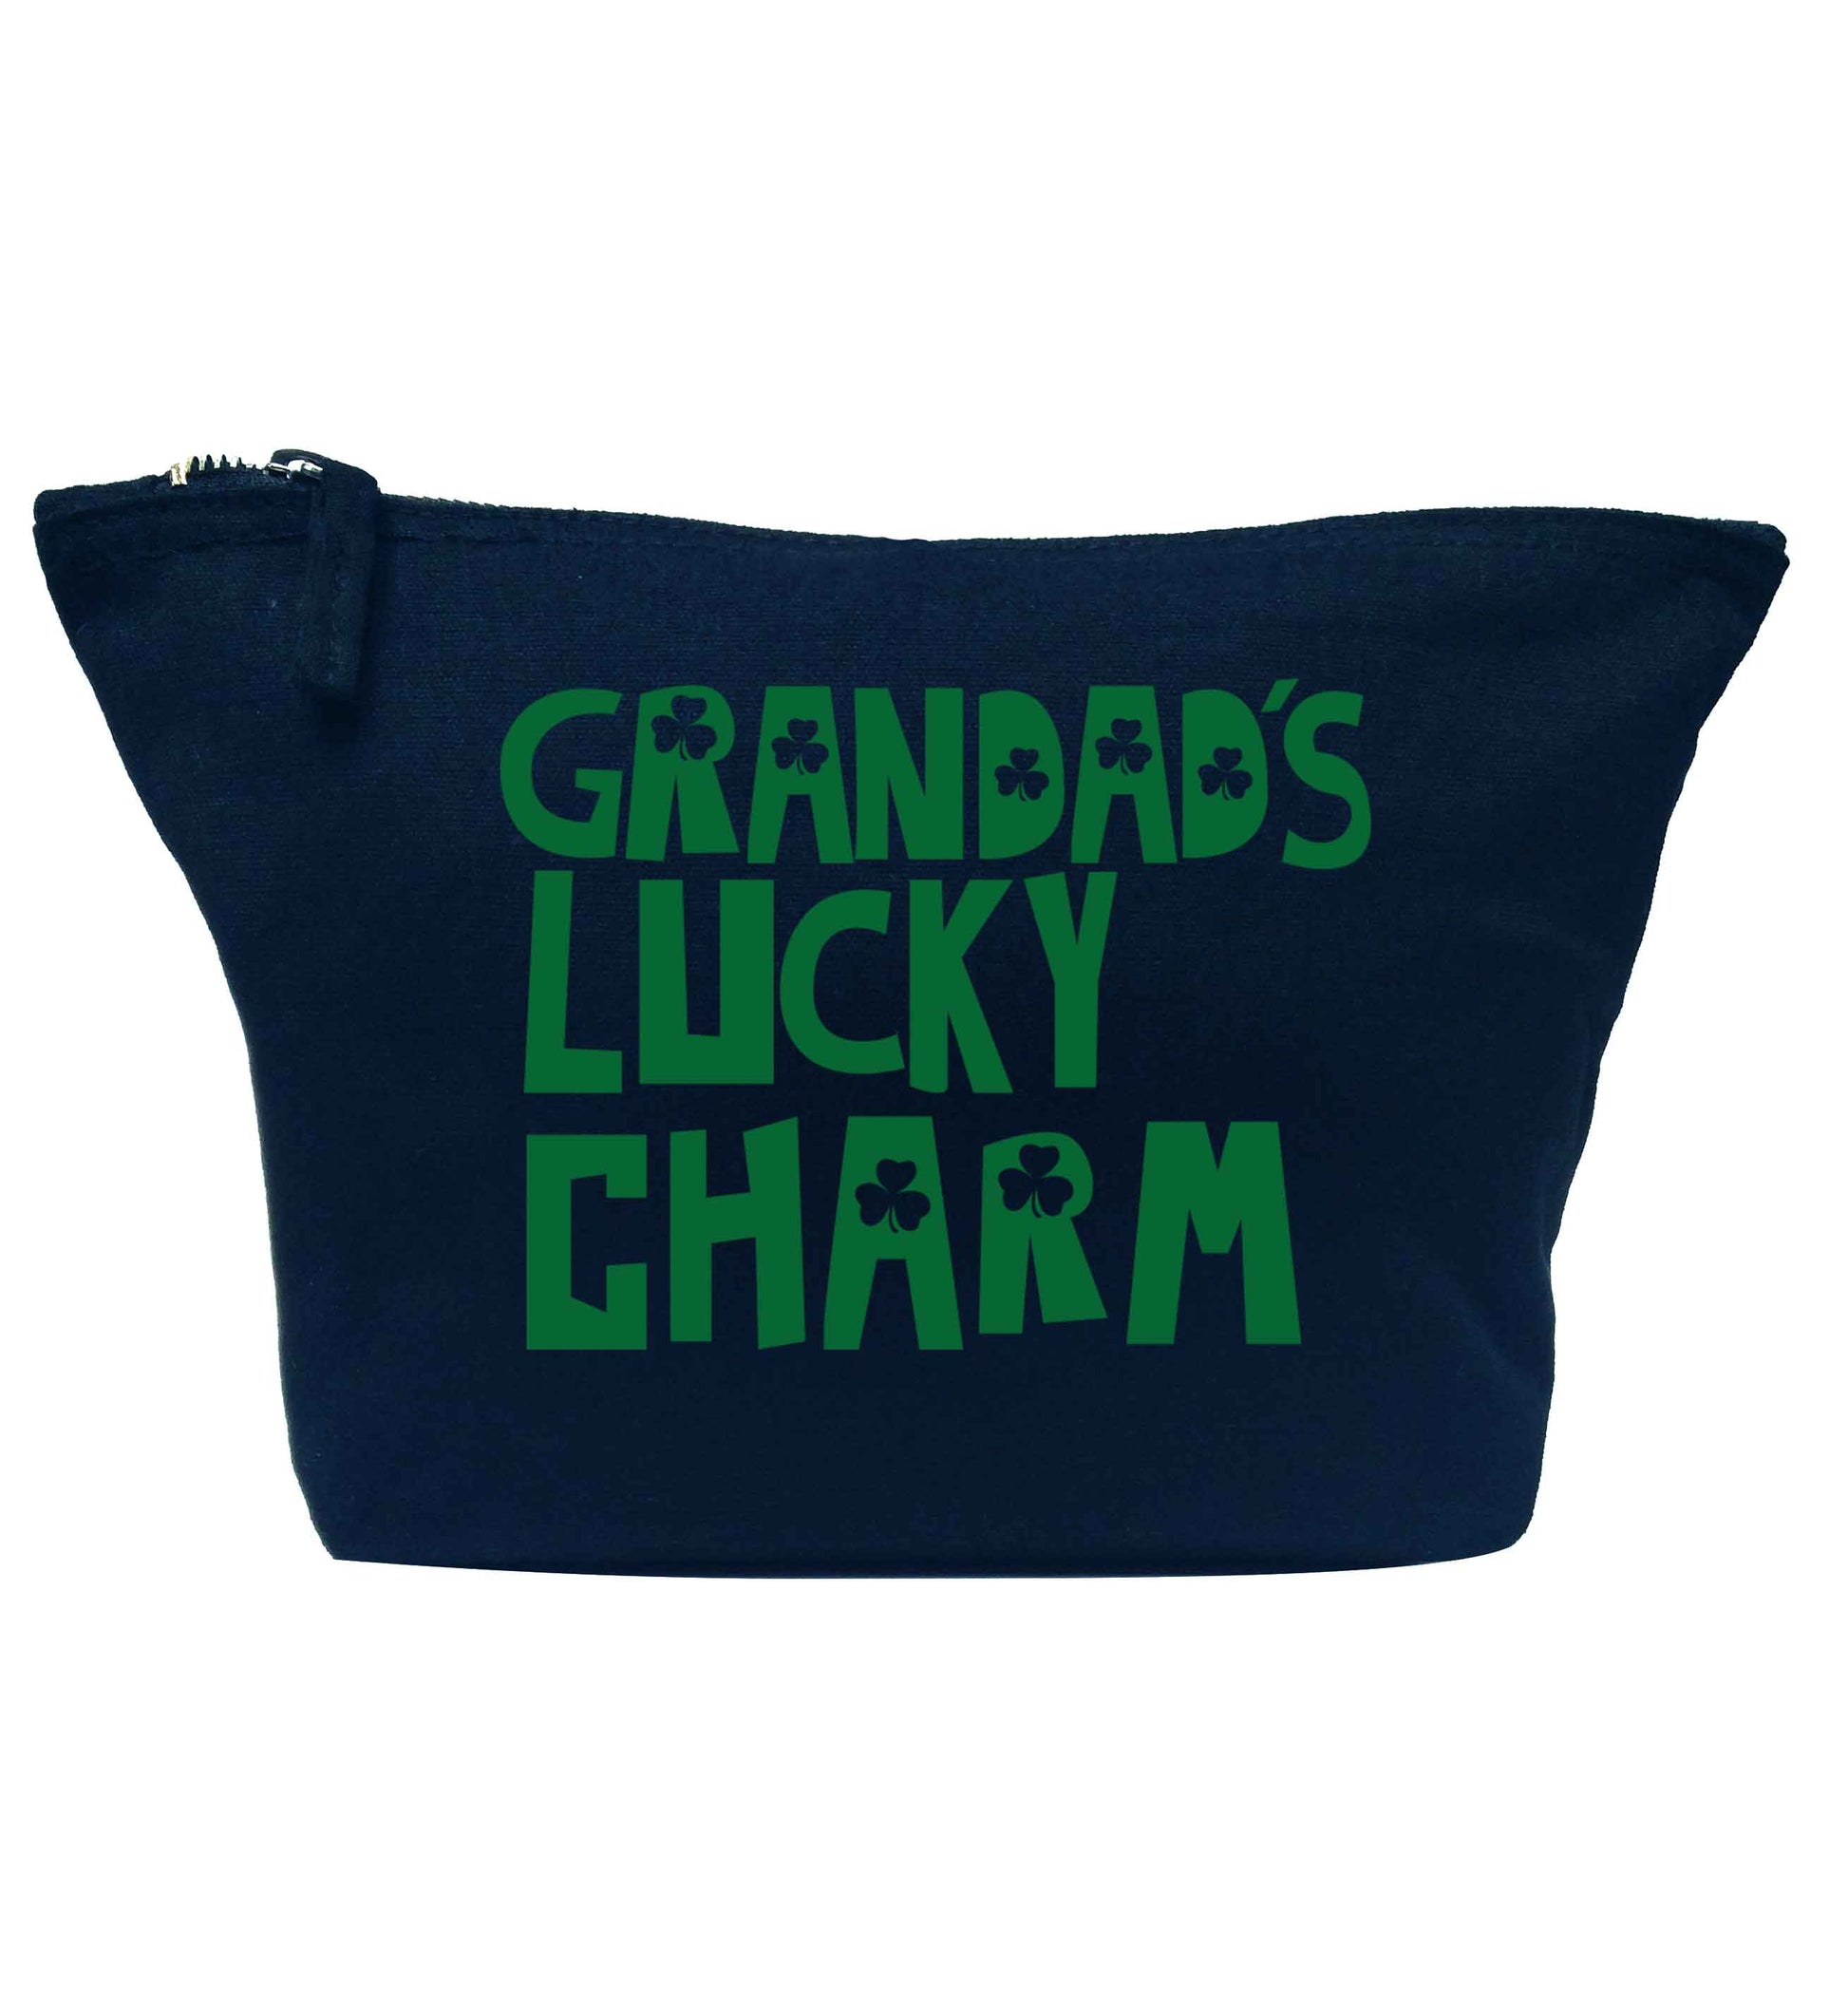 Grandad's lucky charm  navy makeup bag